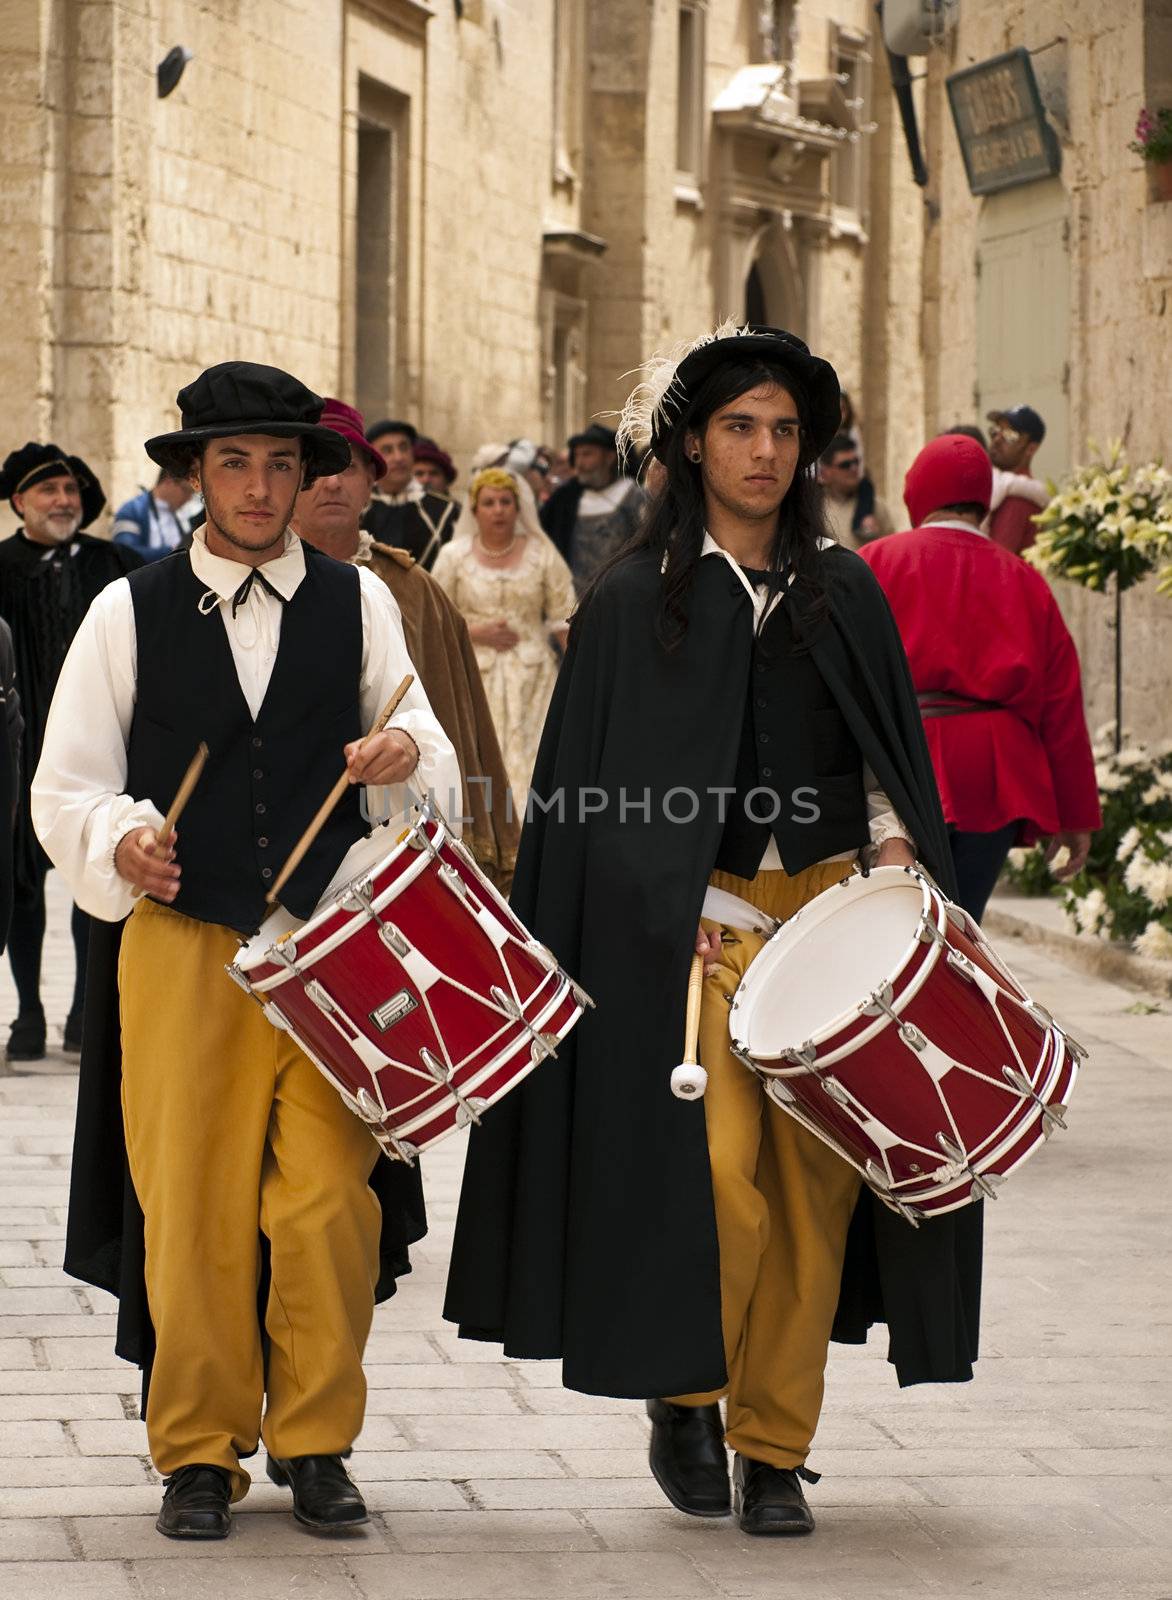 Medieval Street Drummer by PhotoWorks